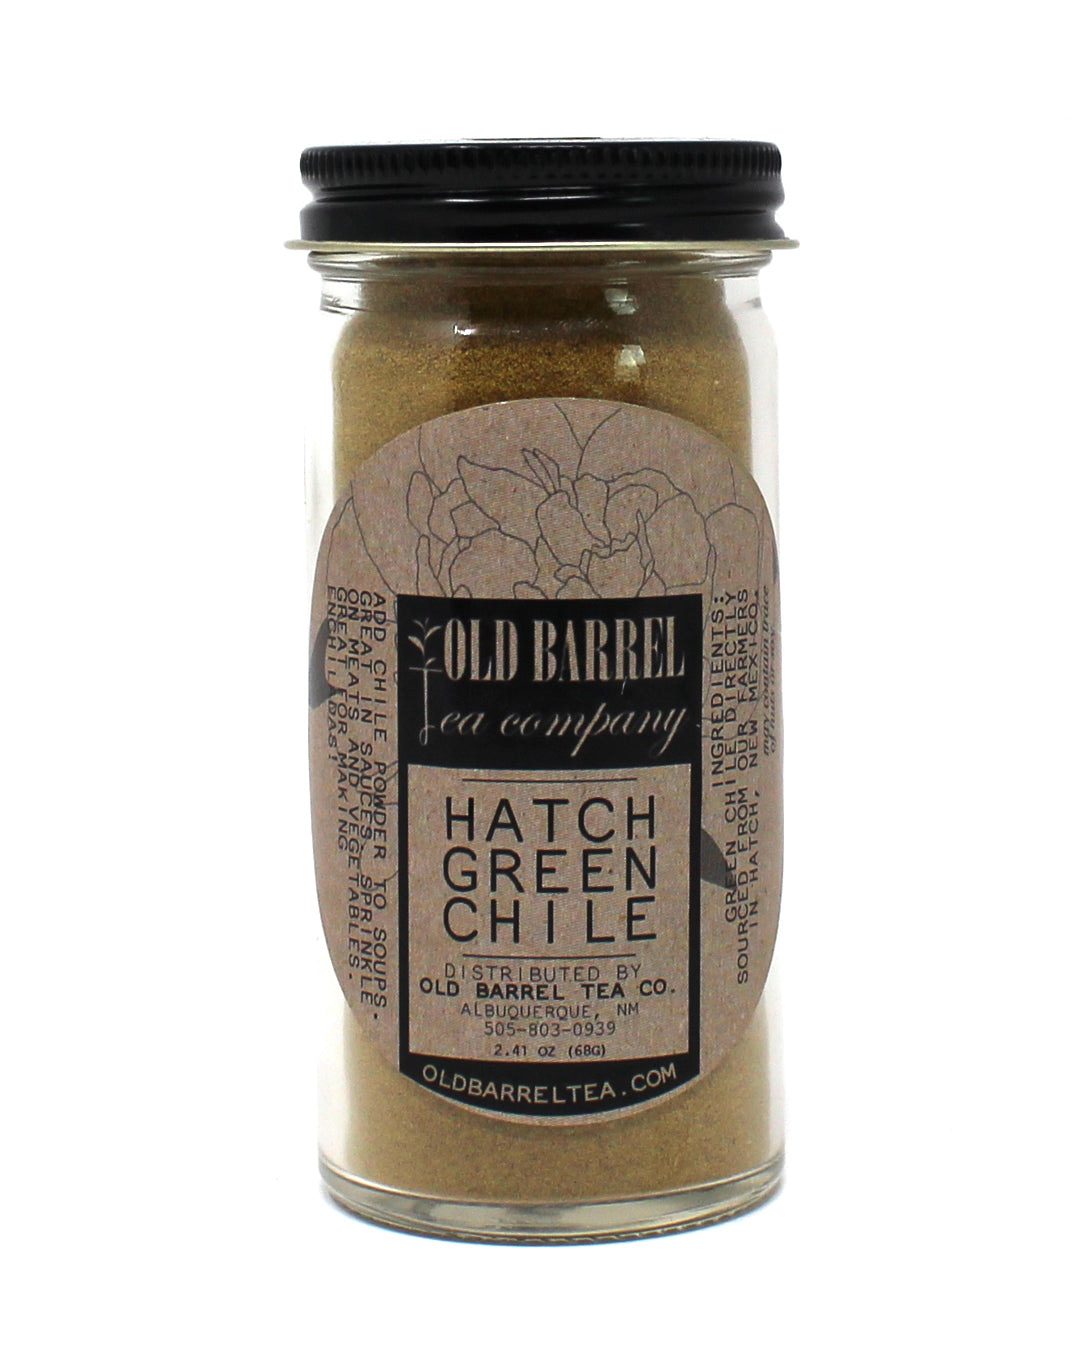 Hatch Green Chile Powder - Hatch, New Mexico